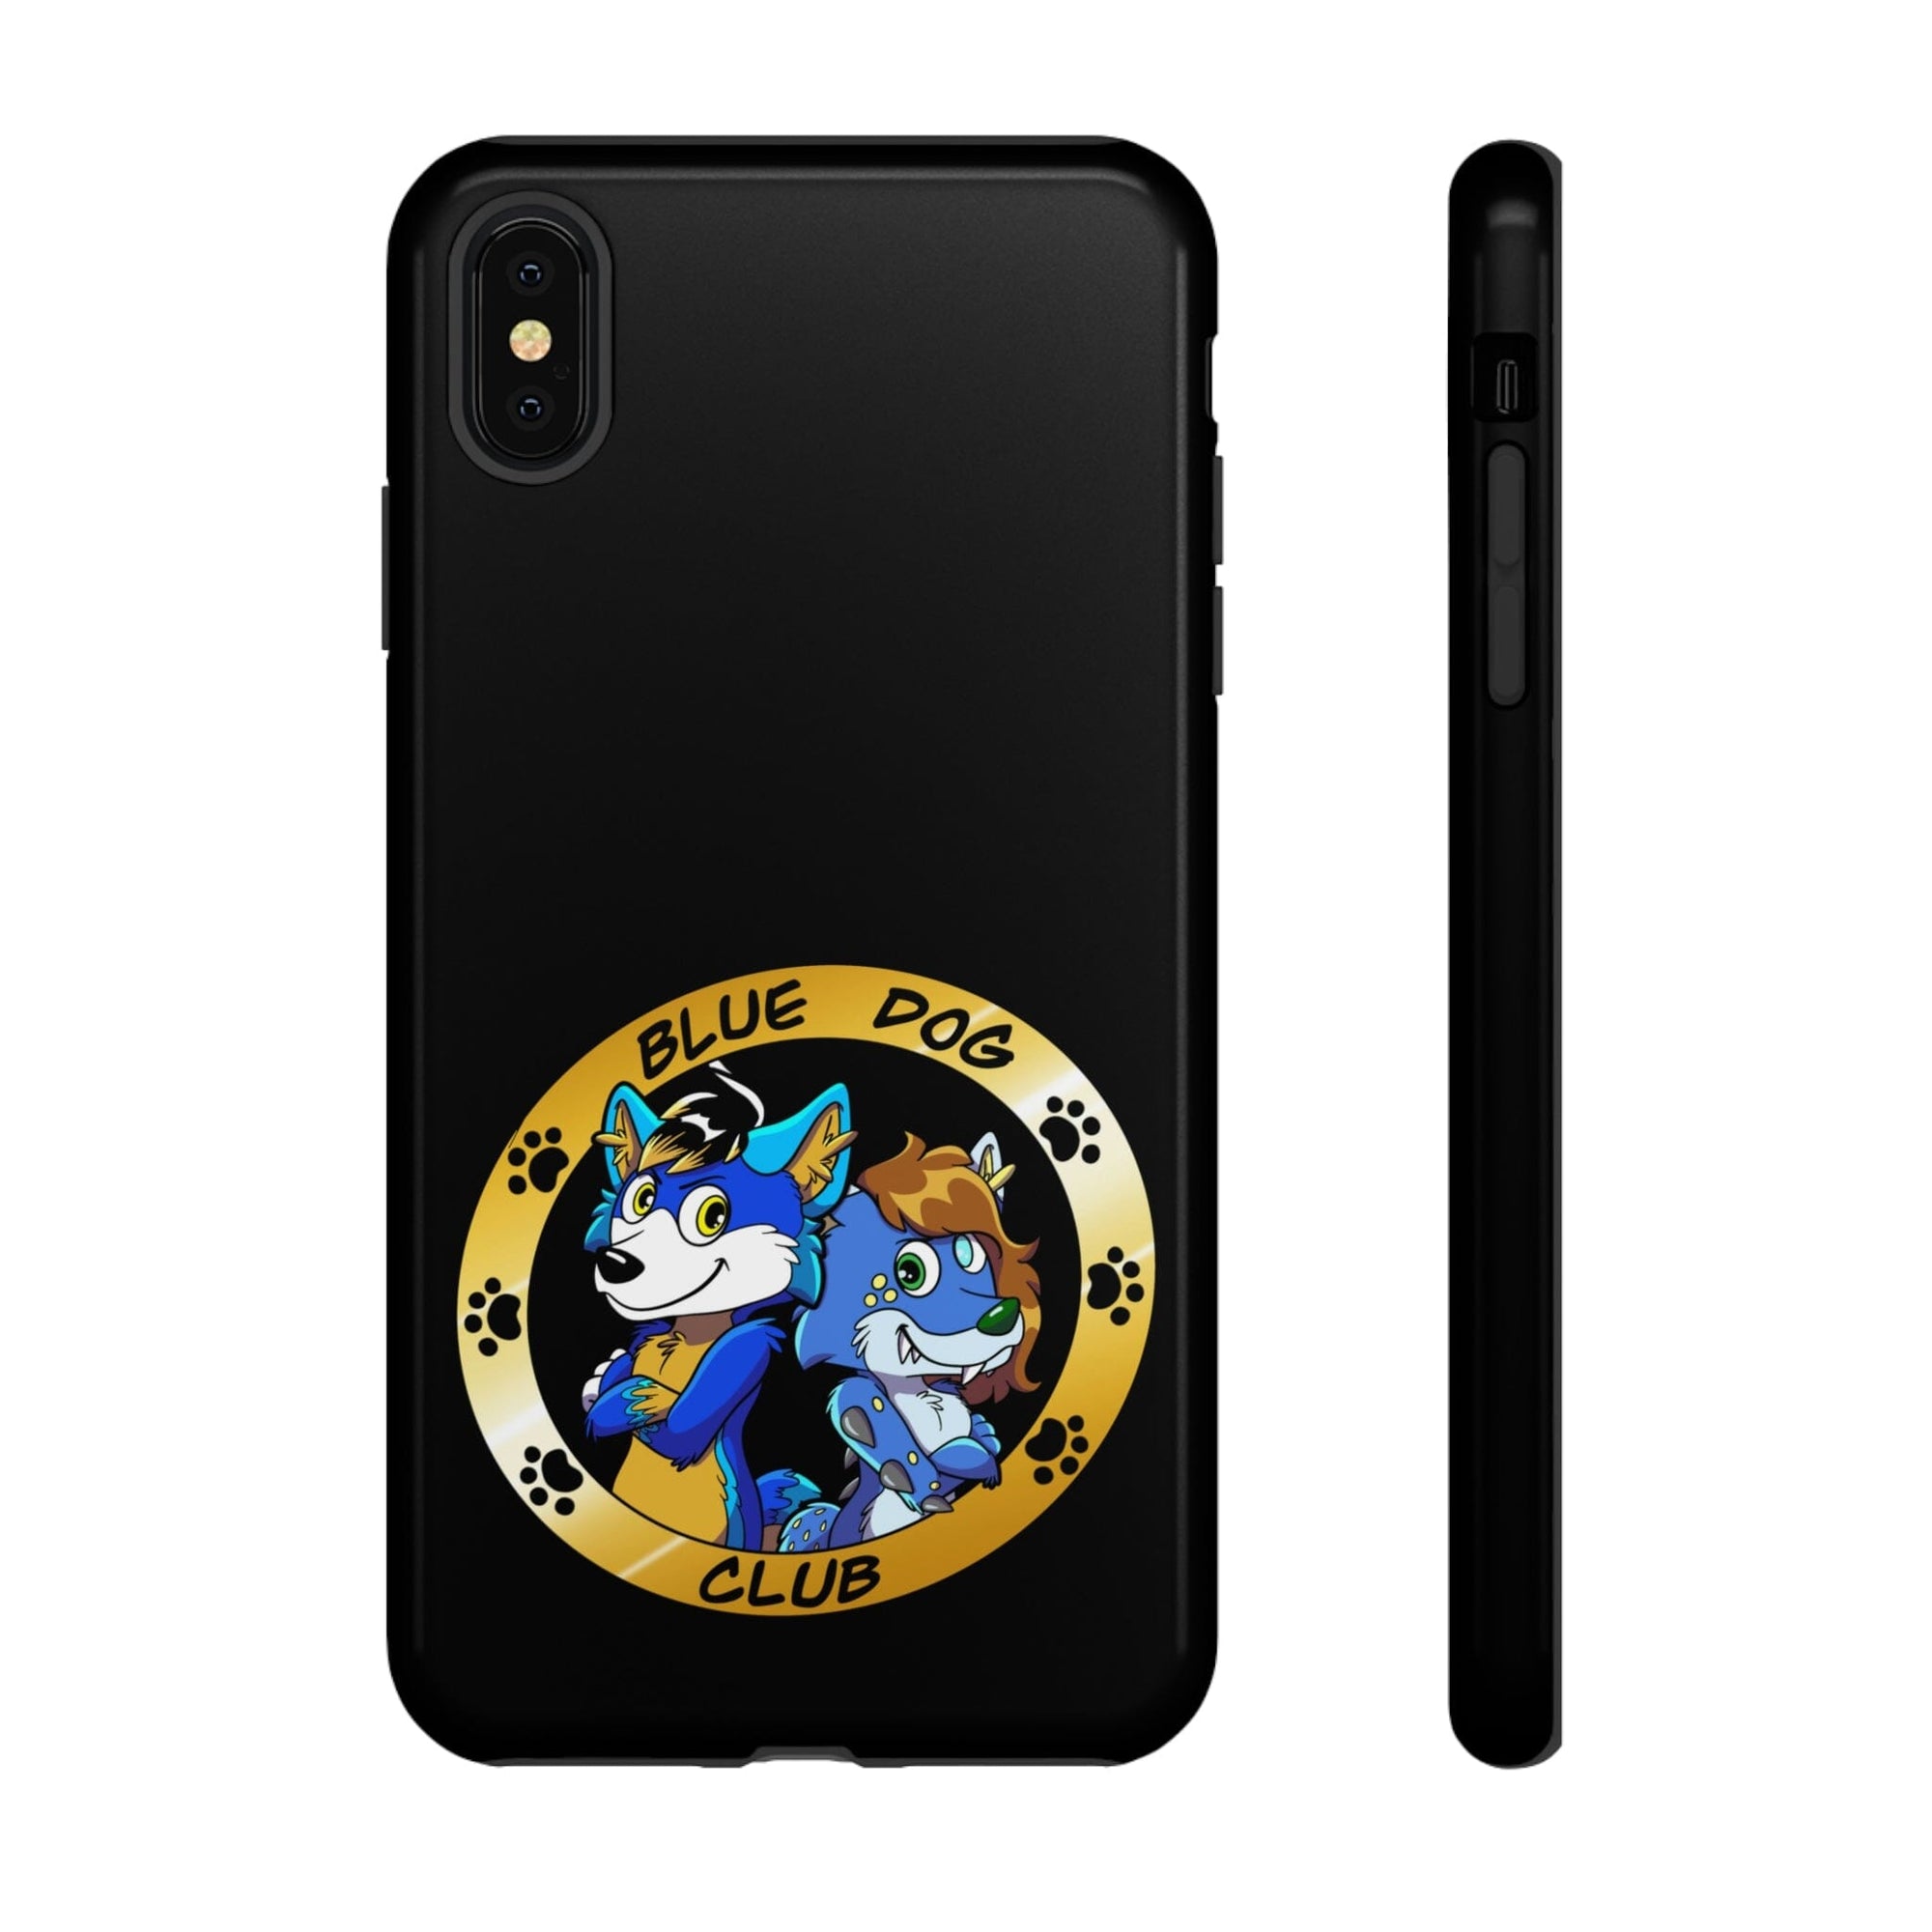 Hund The Hound - Blue Dog Club - Phone Case Phone Case Printify iPhone XS MAX Glossy 